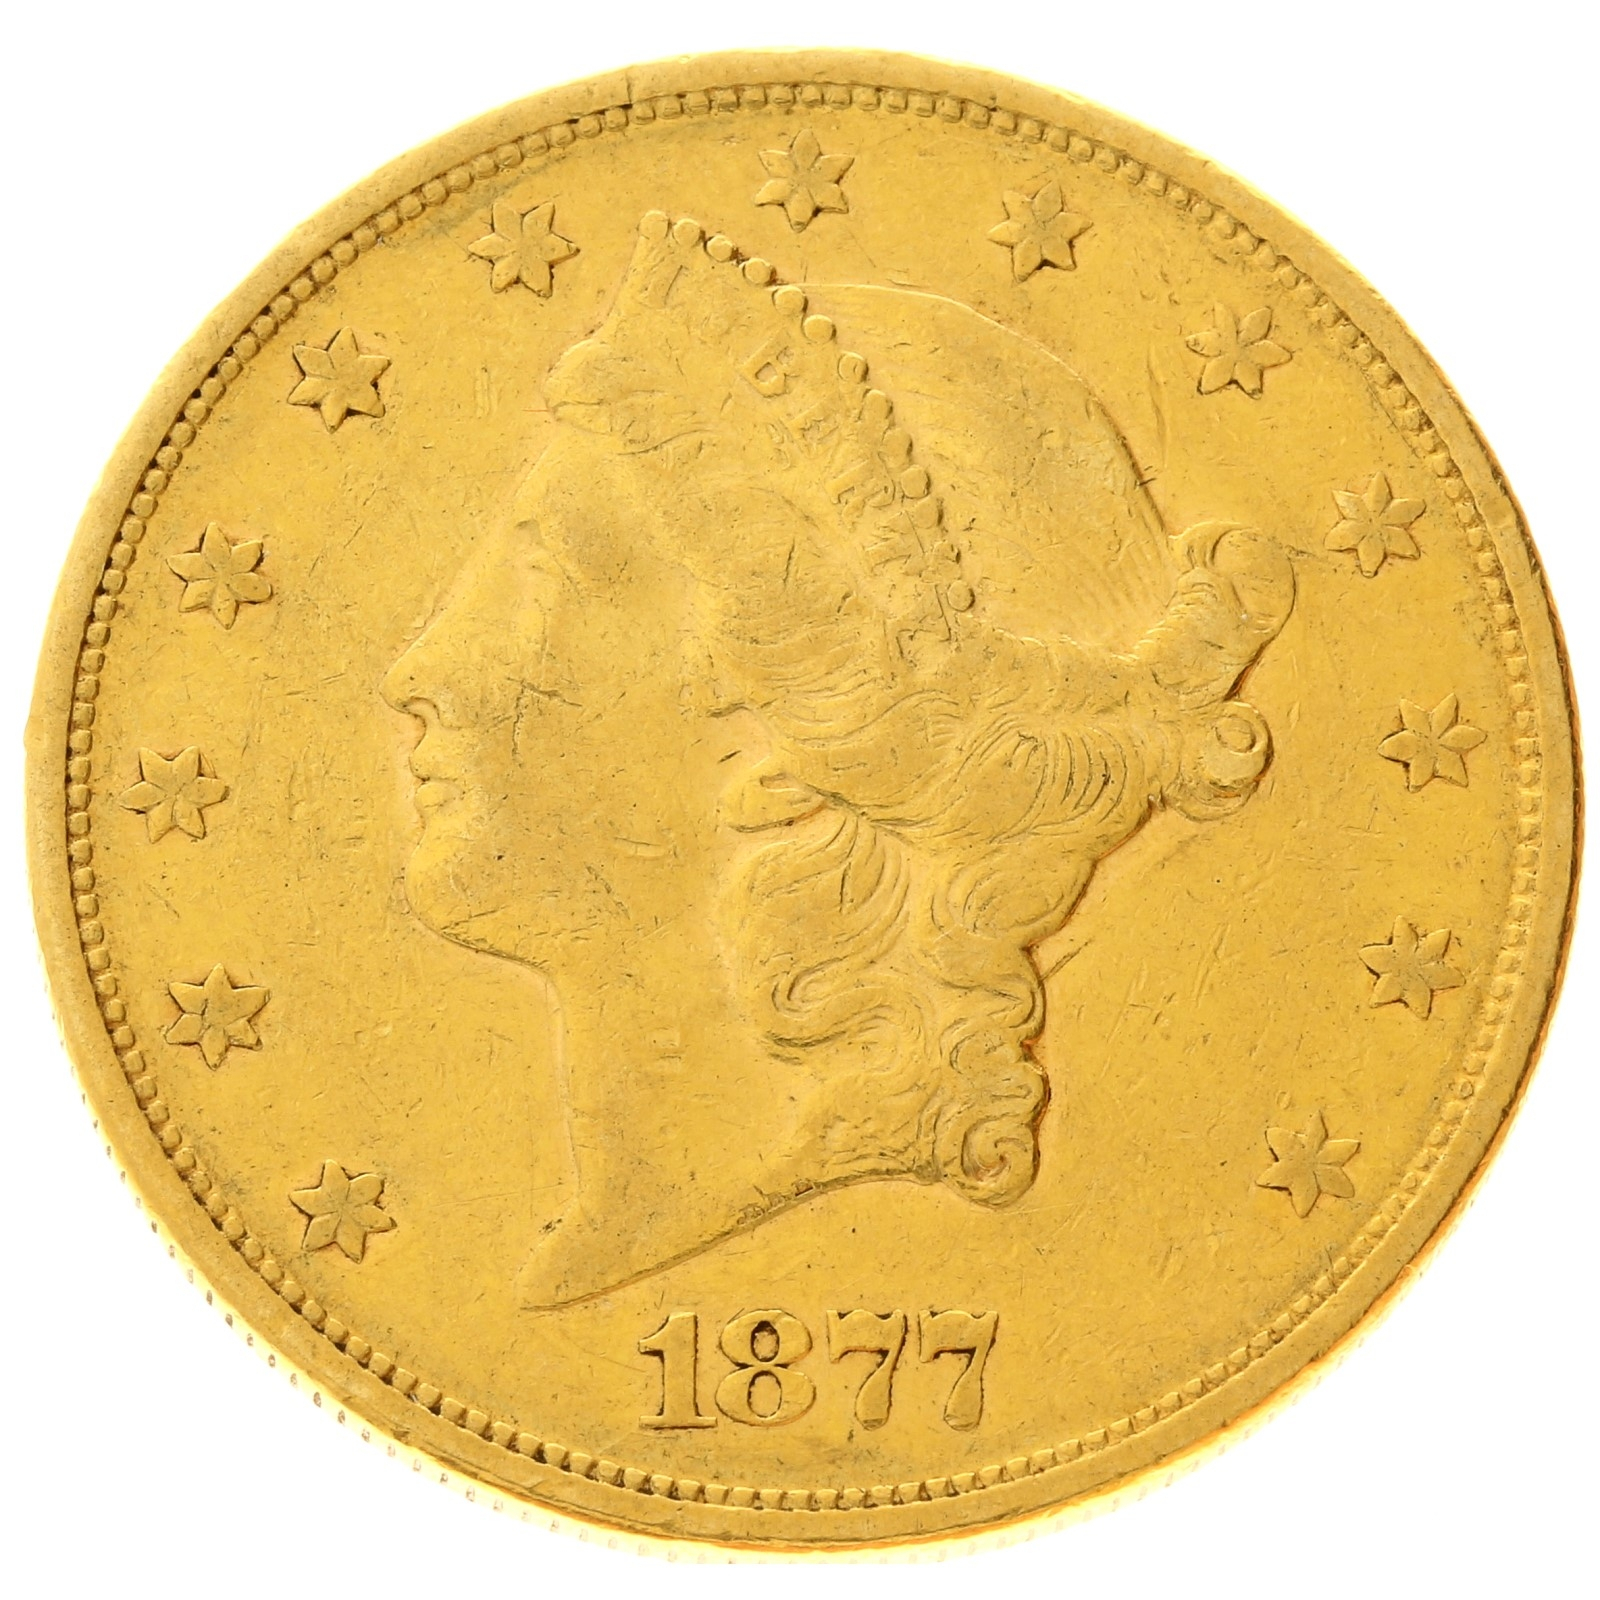 USA - 20 dollars 1877 - S - Liberty head